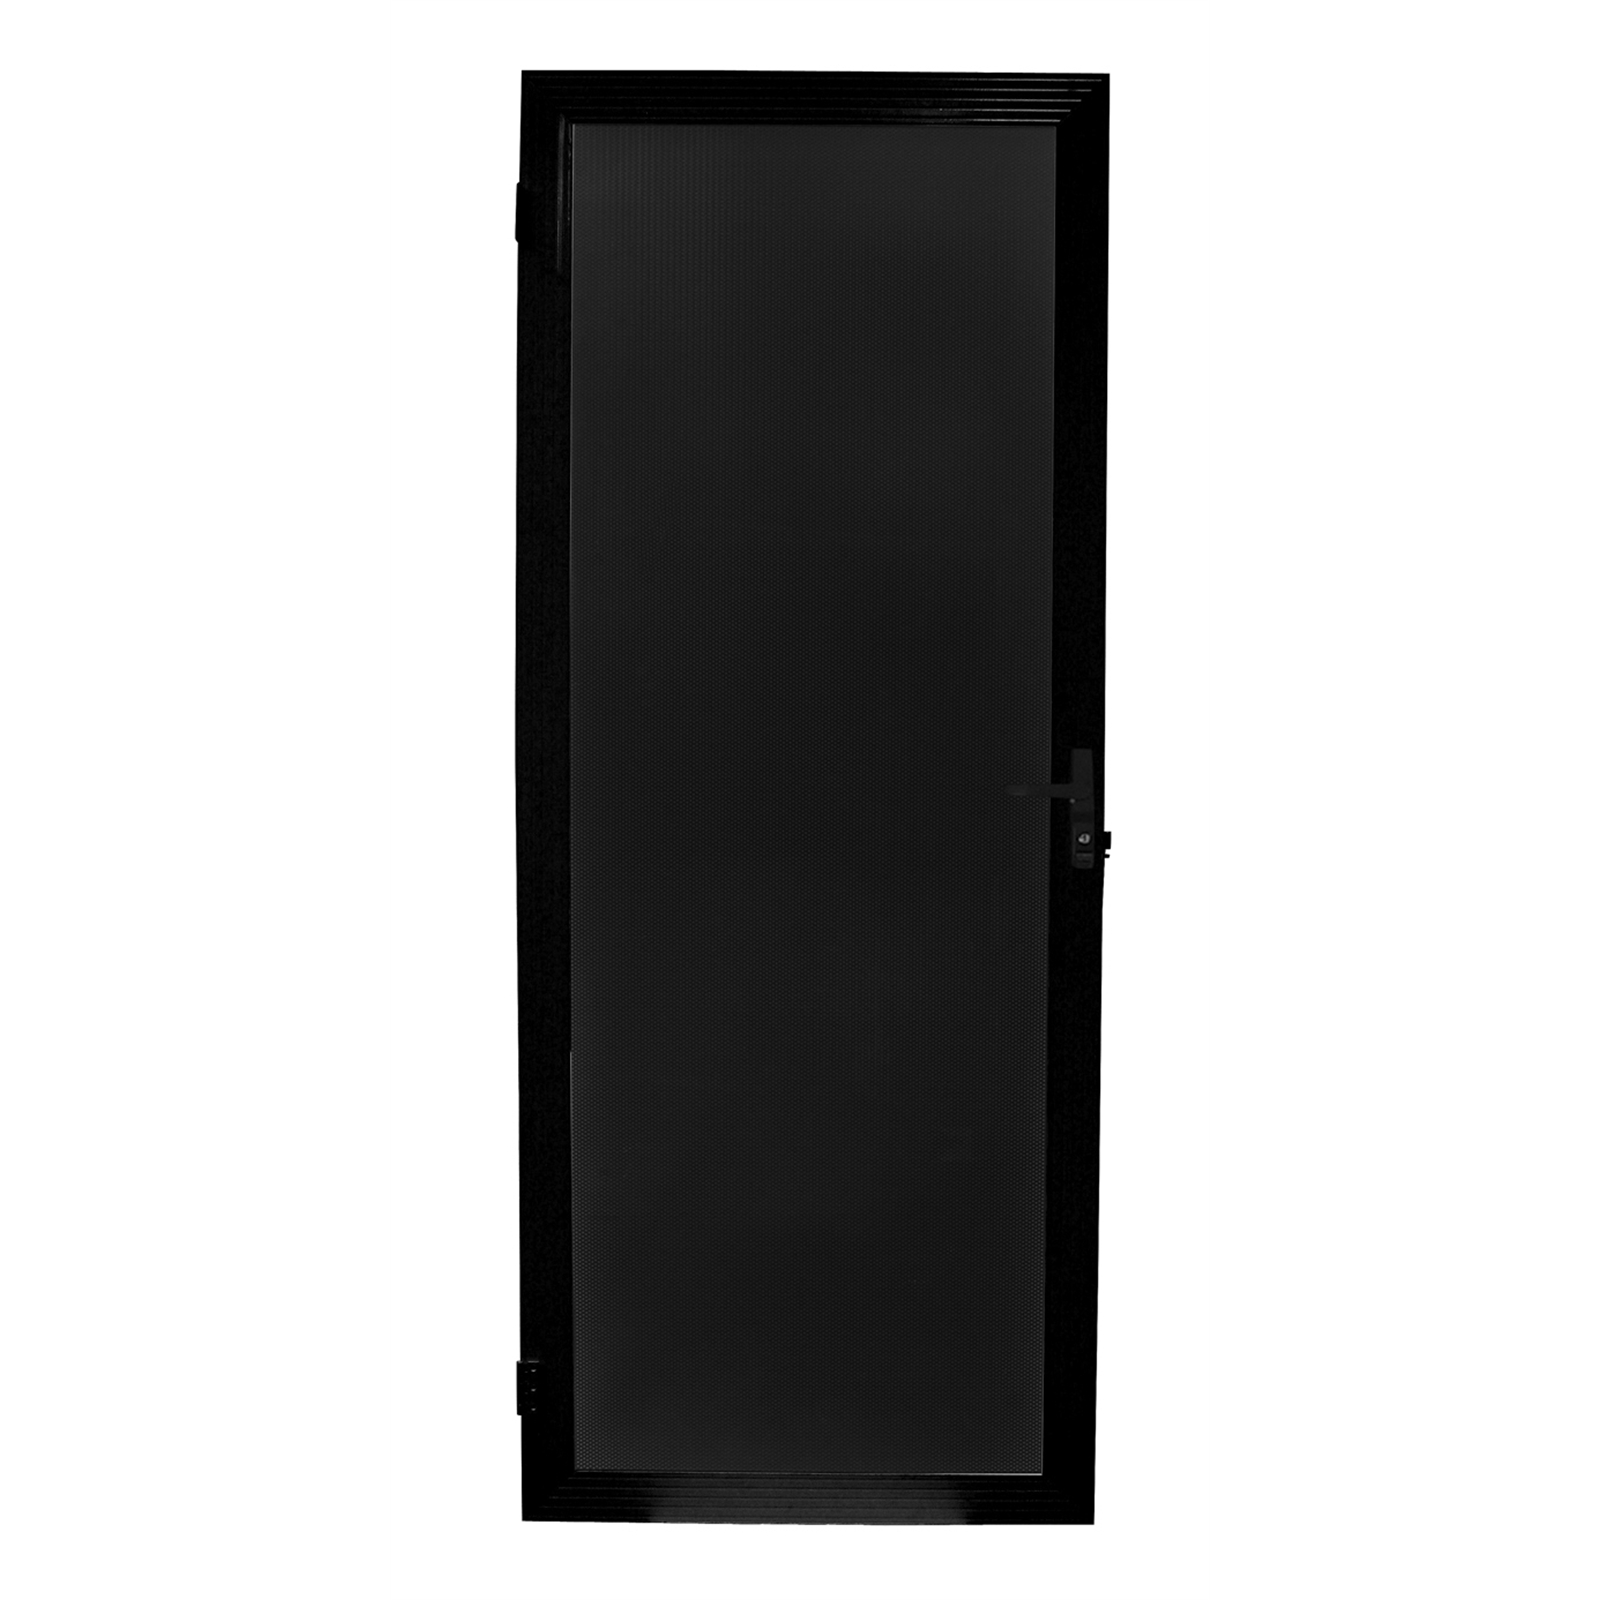 Bastion 2024 x 806mm - 2040 x 820mm Black Aluminium Soho Adjustable Barrier Security Door